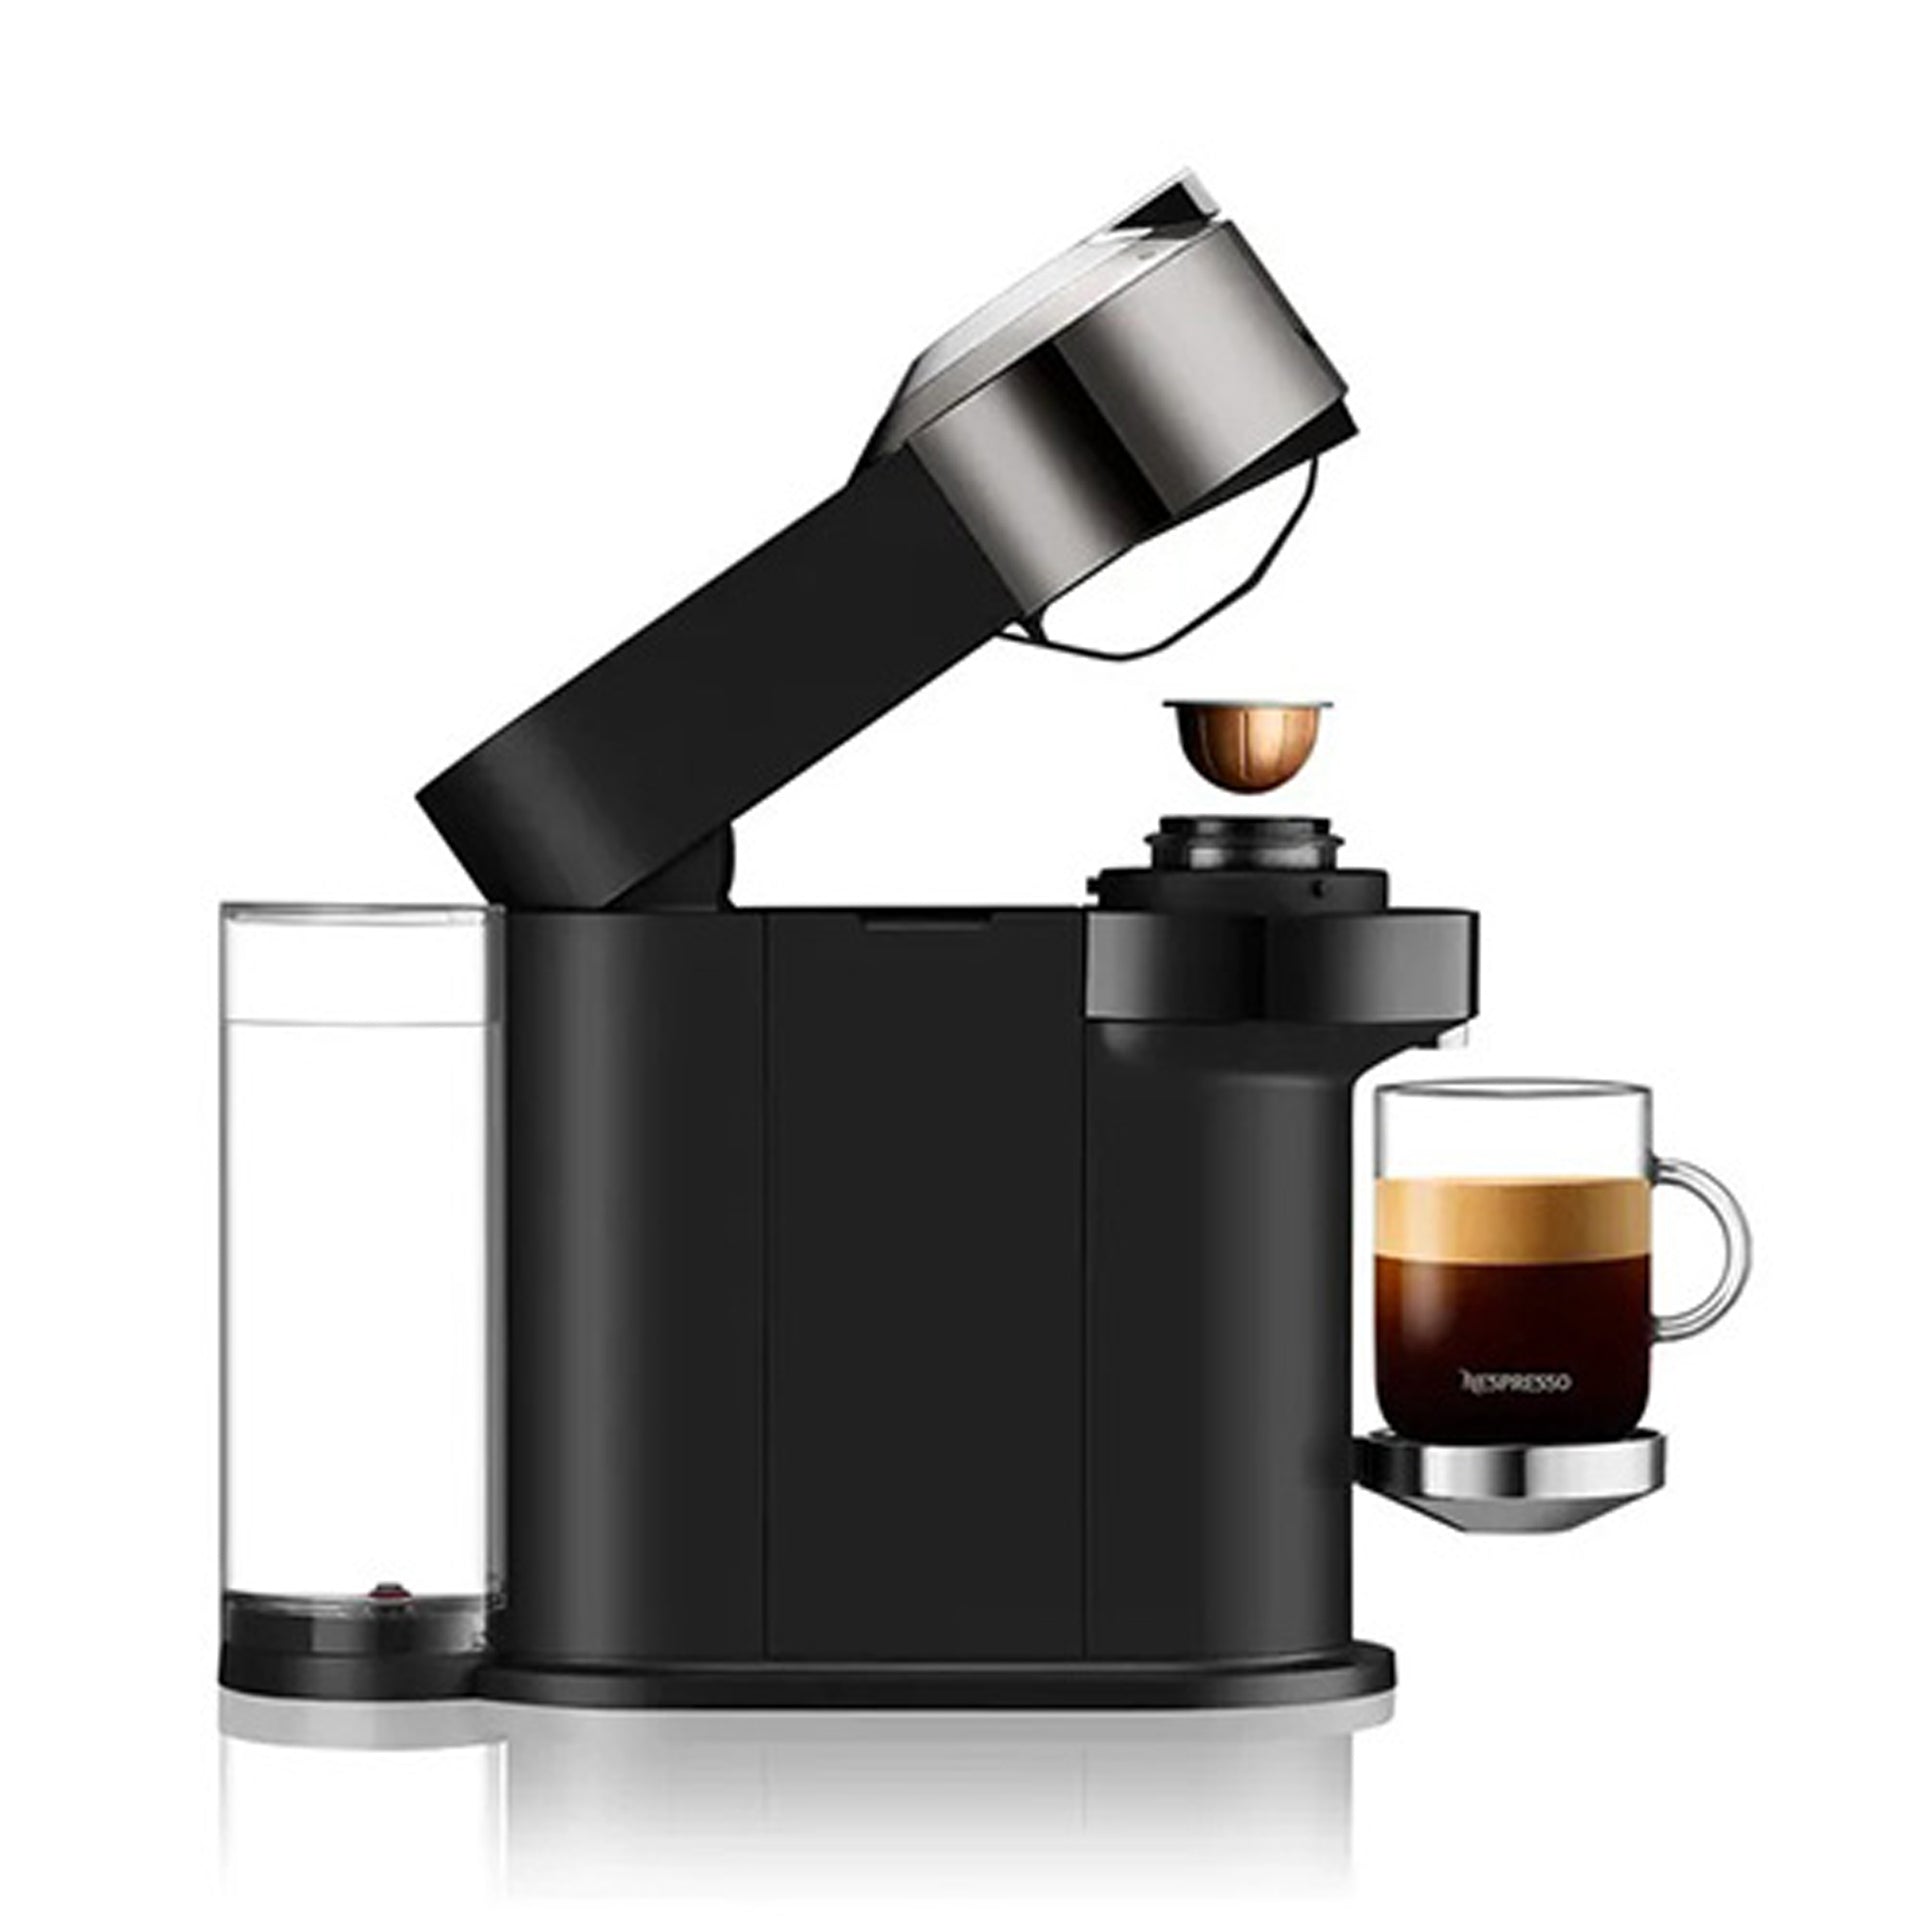 Nespresso Vertuo Coffee Machine - Dark Chrome